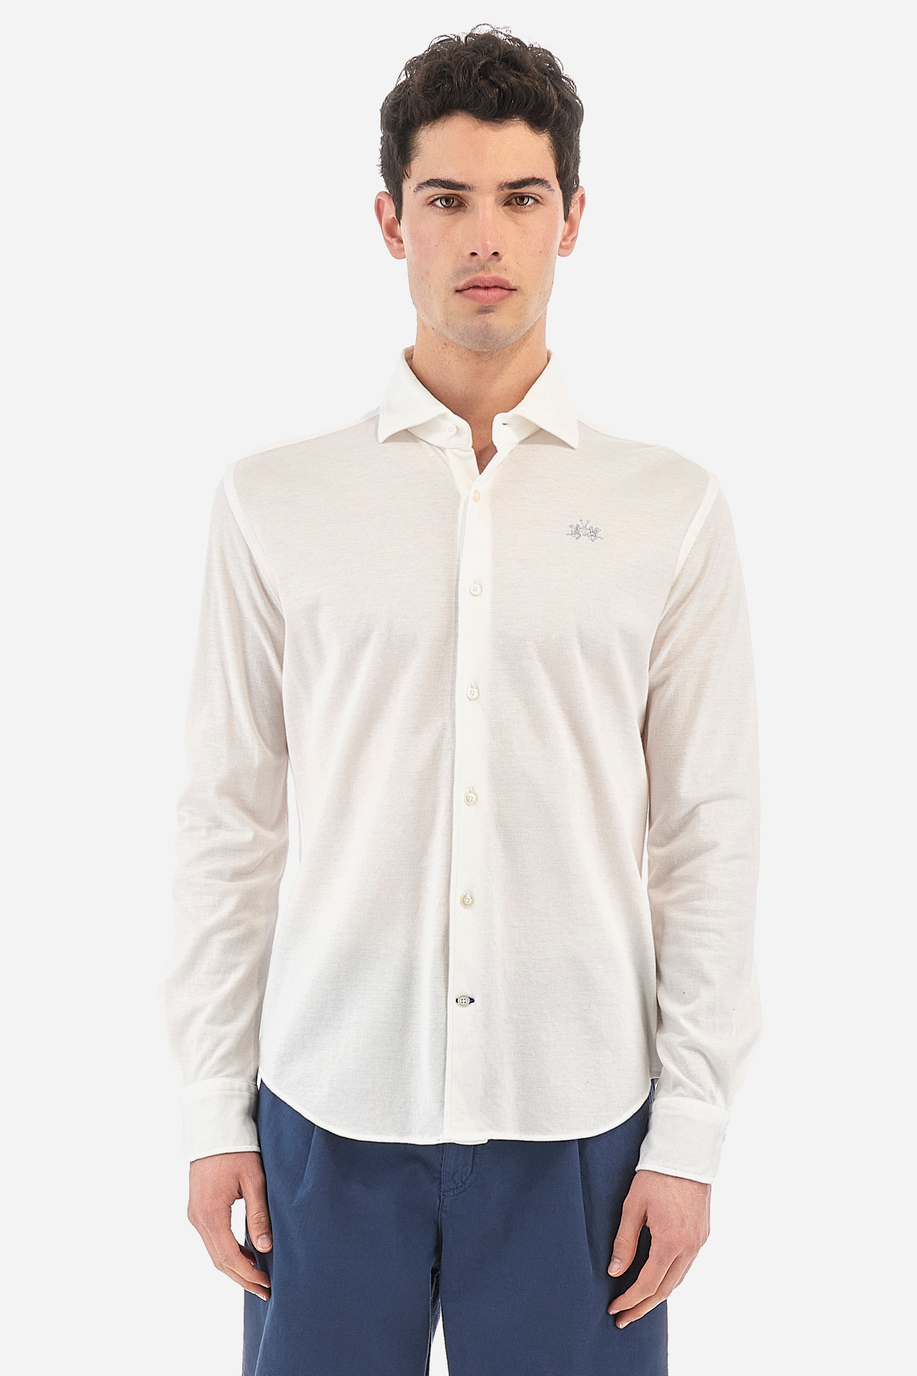 Long-sleeved shirt in cotton piqué, fitted cut for men - Qalam - Premium Fabrics | La Martina - Official Online Shop